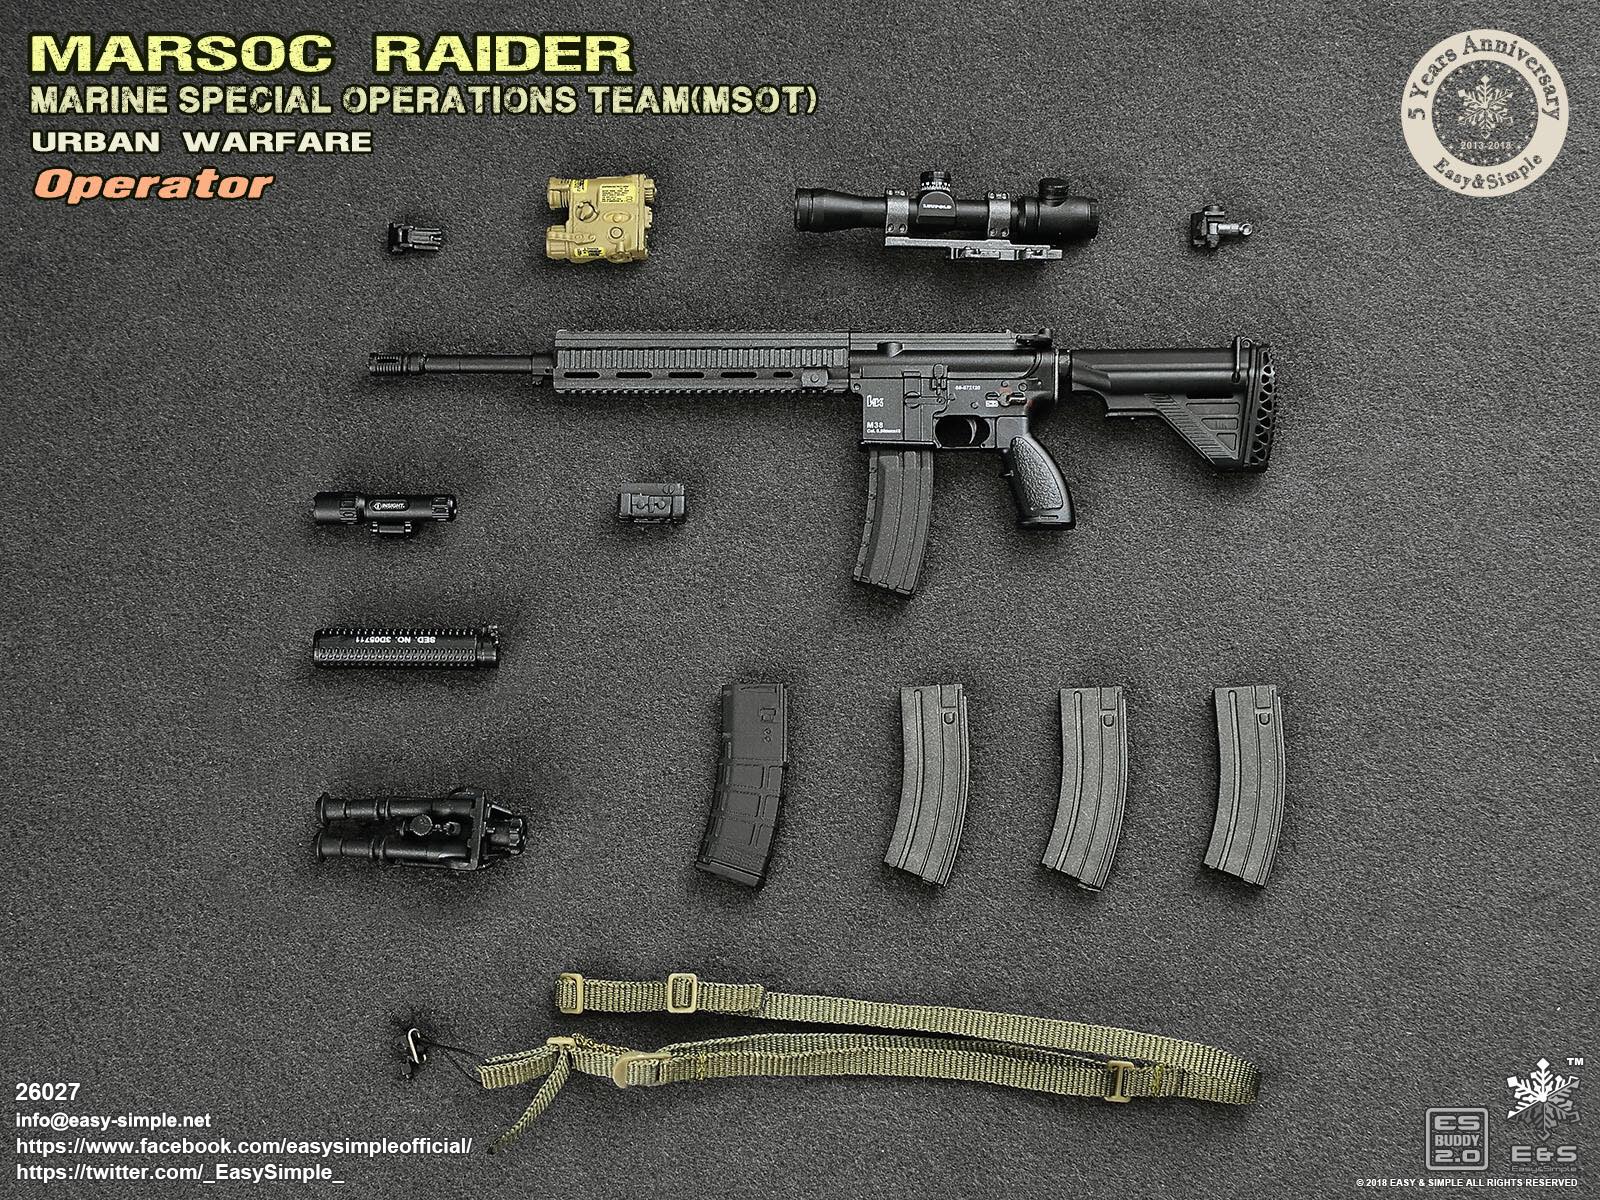 Easy &amp; Simple - 26027 - MARSOC Raider Urban Warfare Operator (1/6 Scale) (5-Year Anniversary) - Marvelous Toys